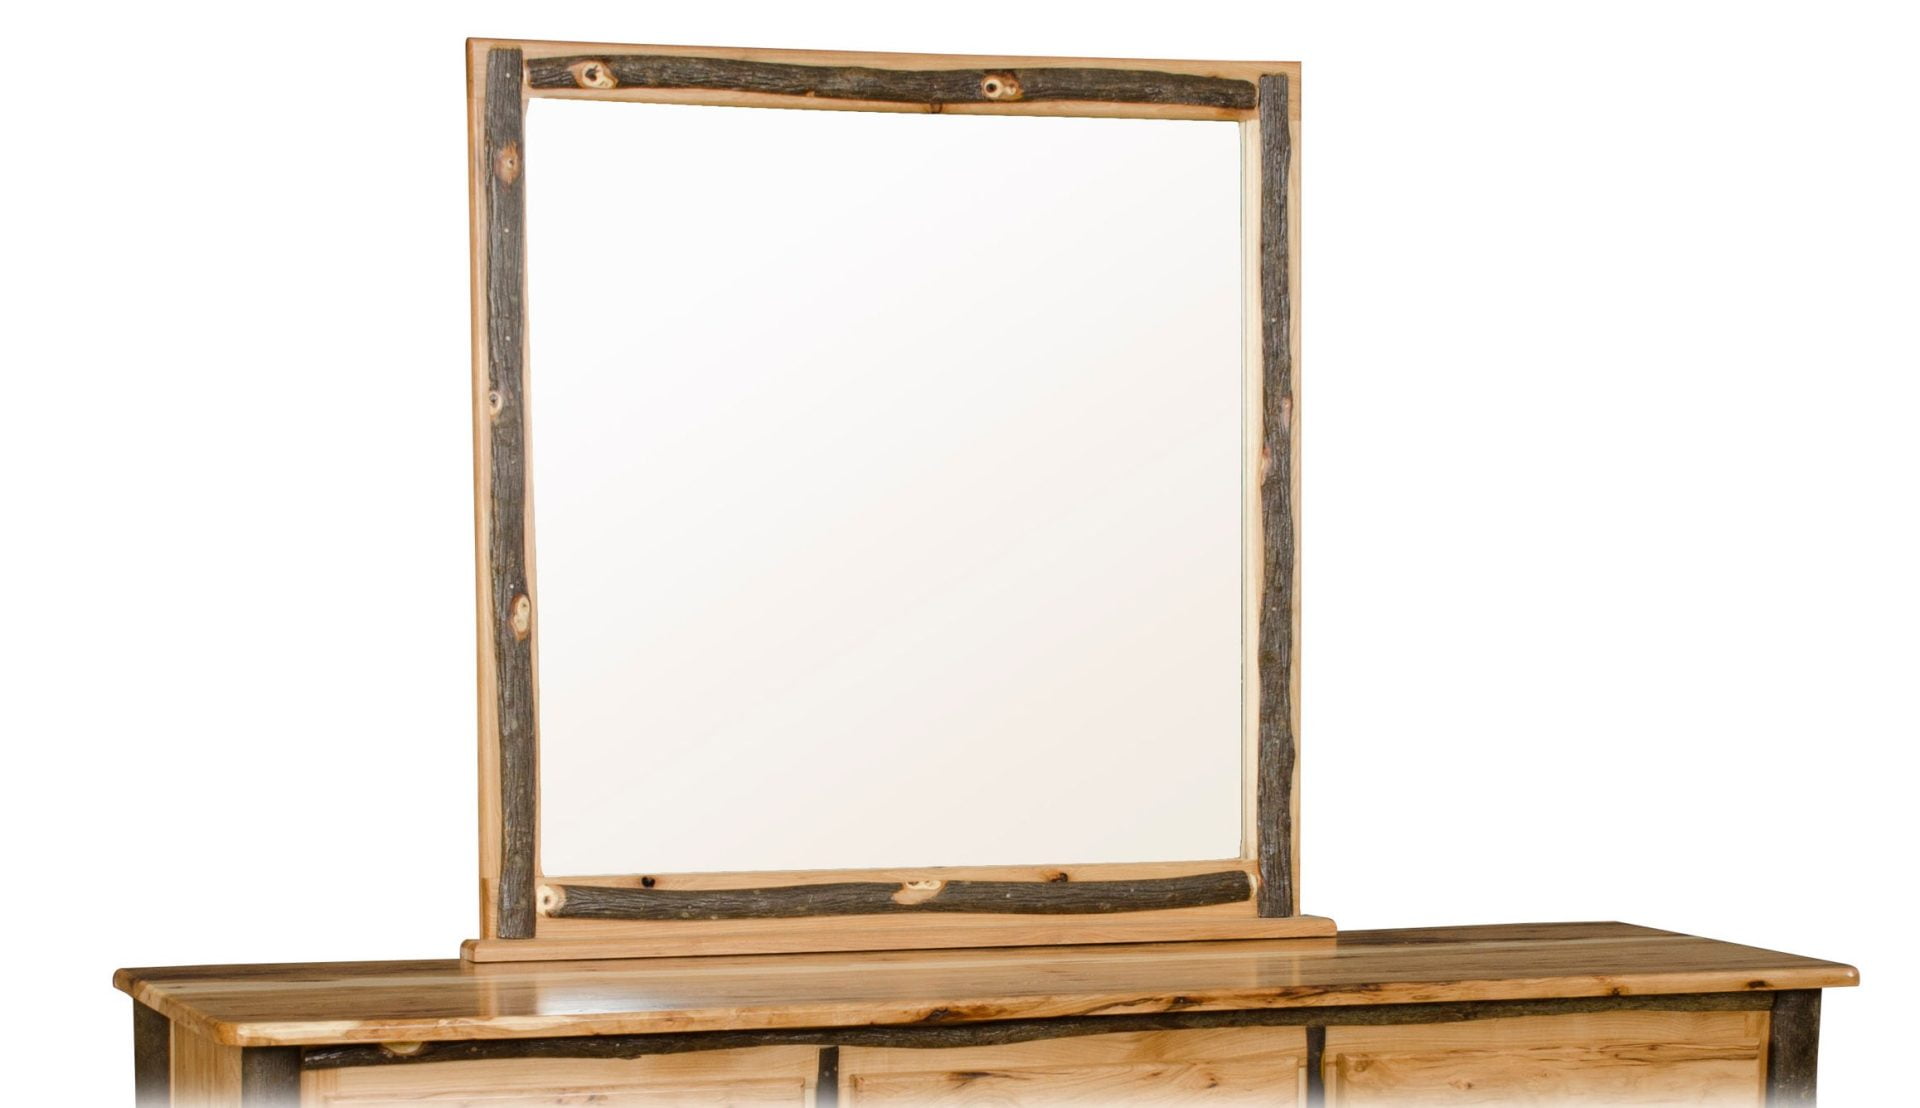 Square Bedroom Mirror Frame – Rustic Hickory Log Trim